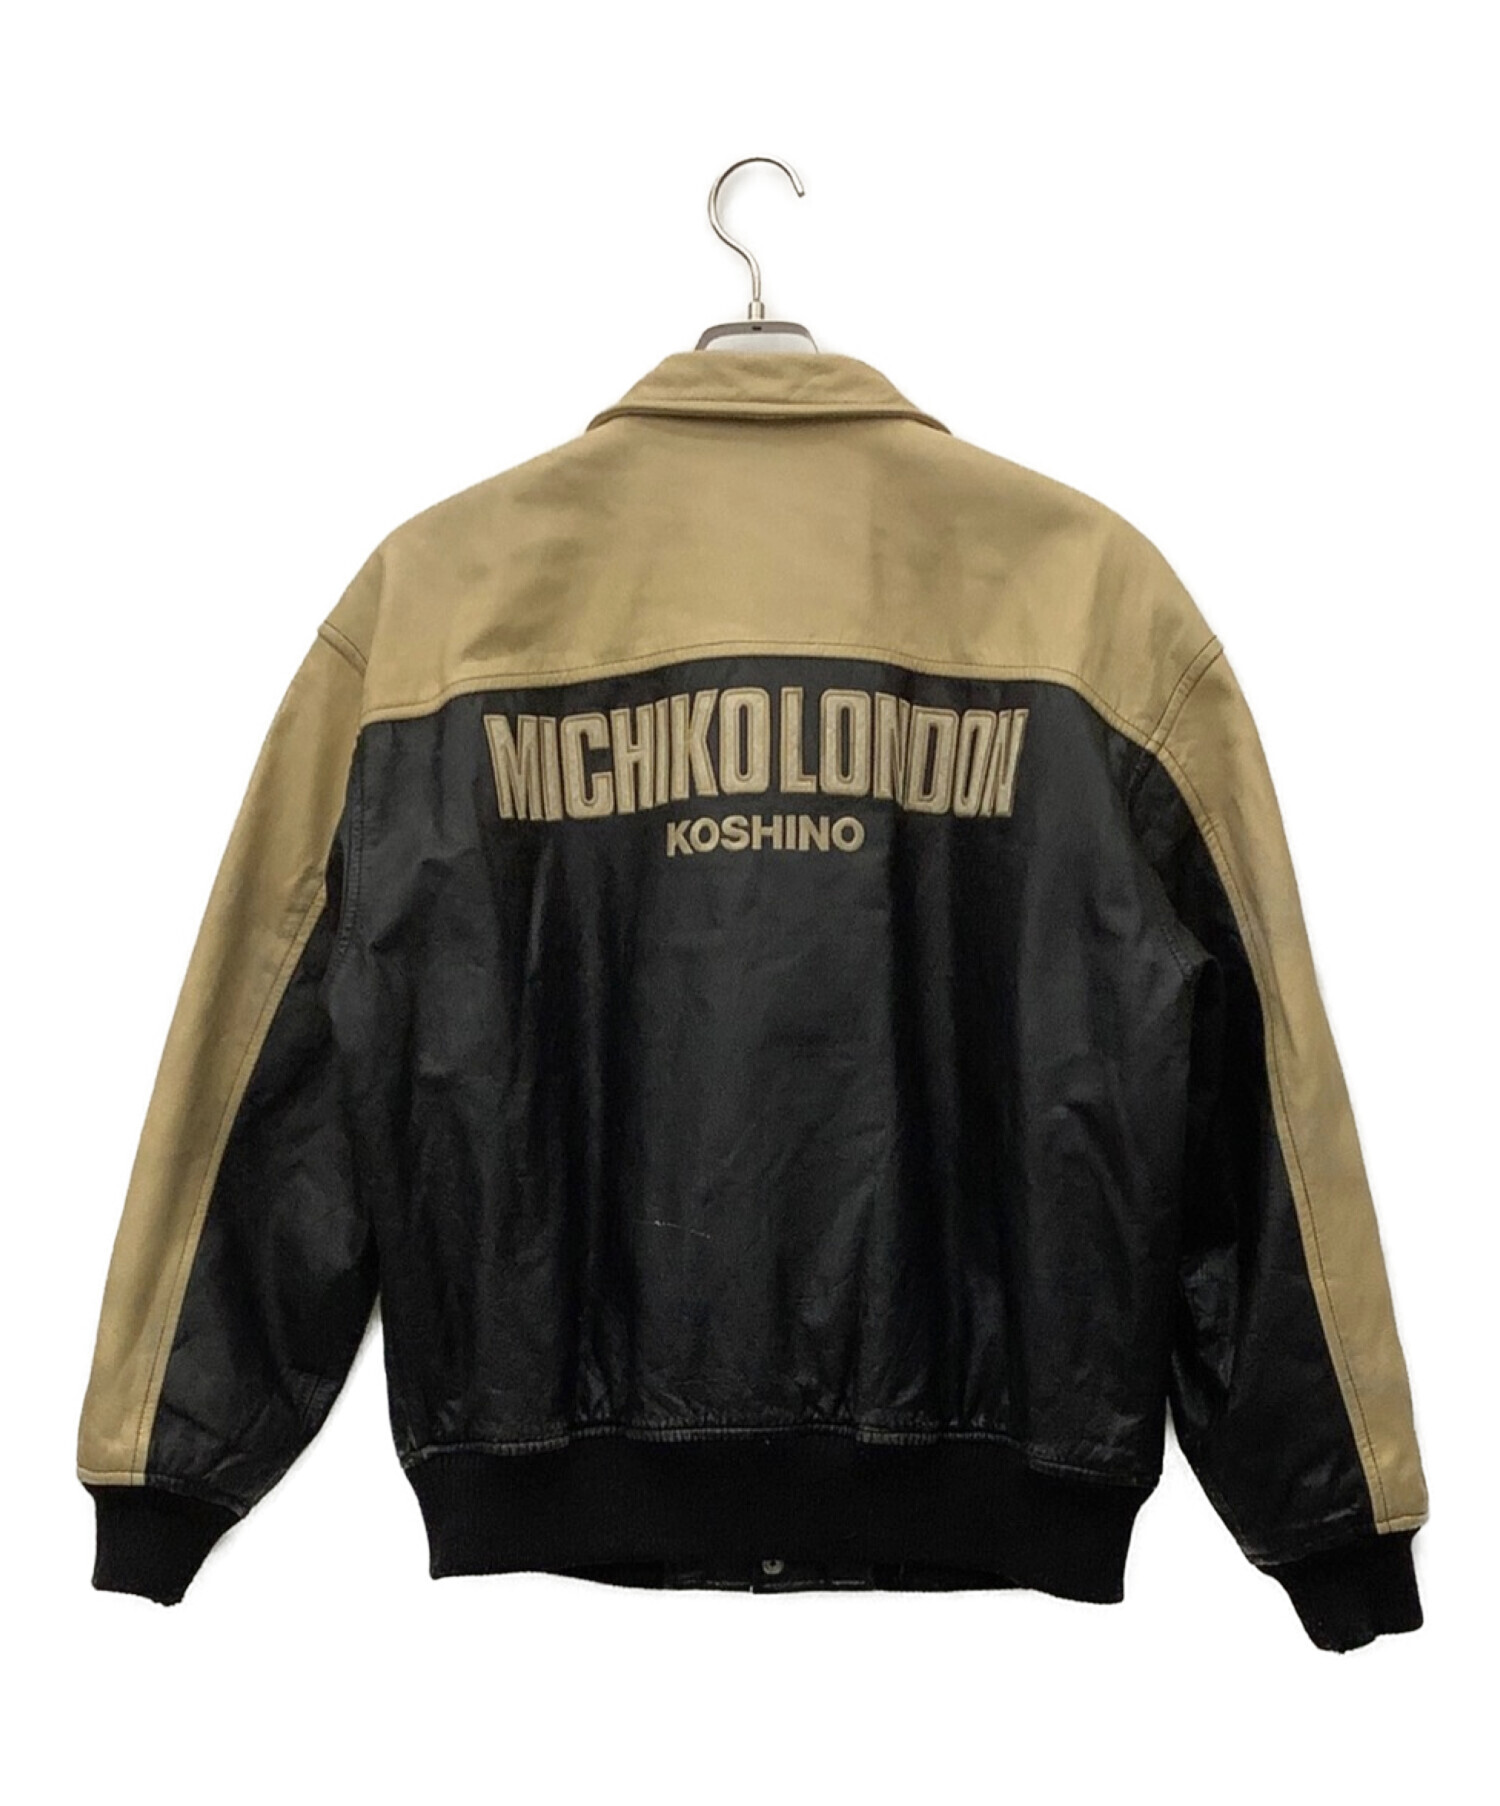 MICHIKO LONDON (ミチコロンドン) ヴィンテージレザージャケット ブラウン×ブラック サイズ:L